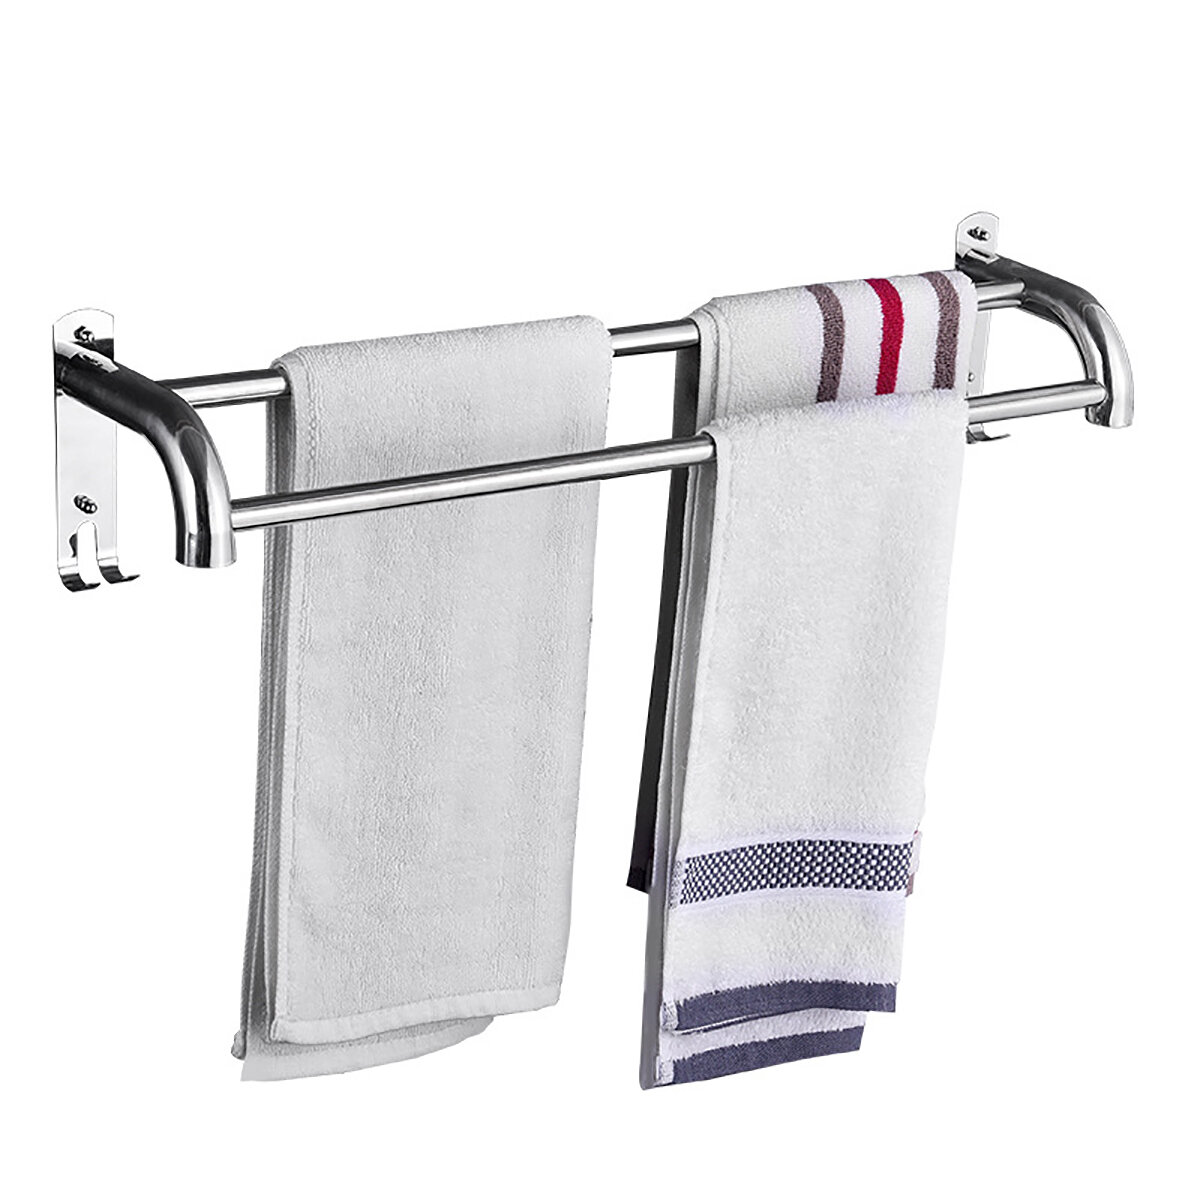 80cm Stainless Steel Single Double Shelf Wall Mounted Bath Towel Rail Rack for Bathroom Storage Shelf Towel Racks